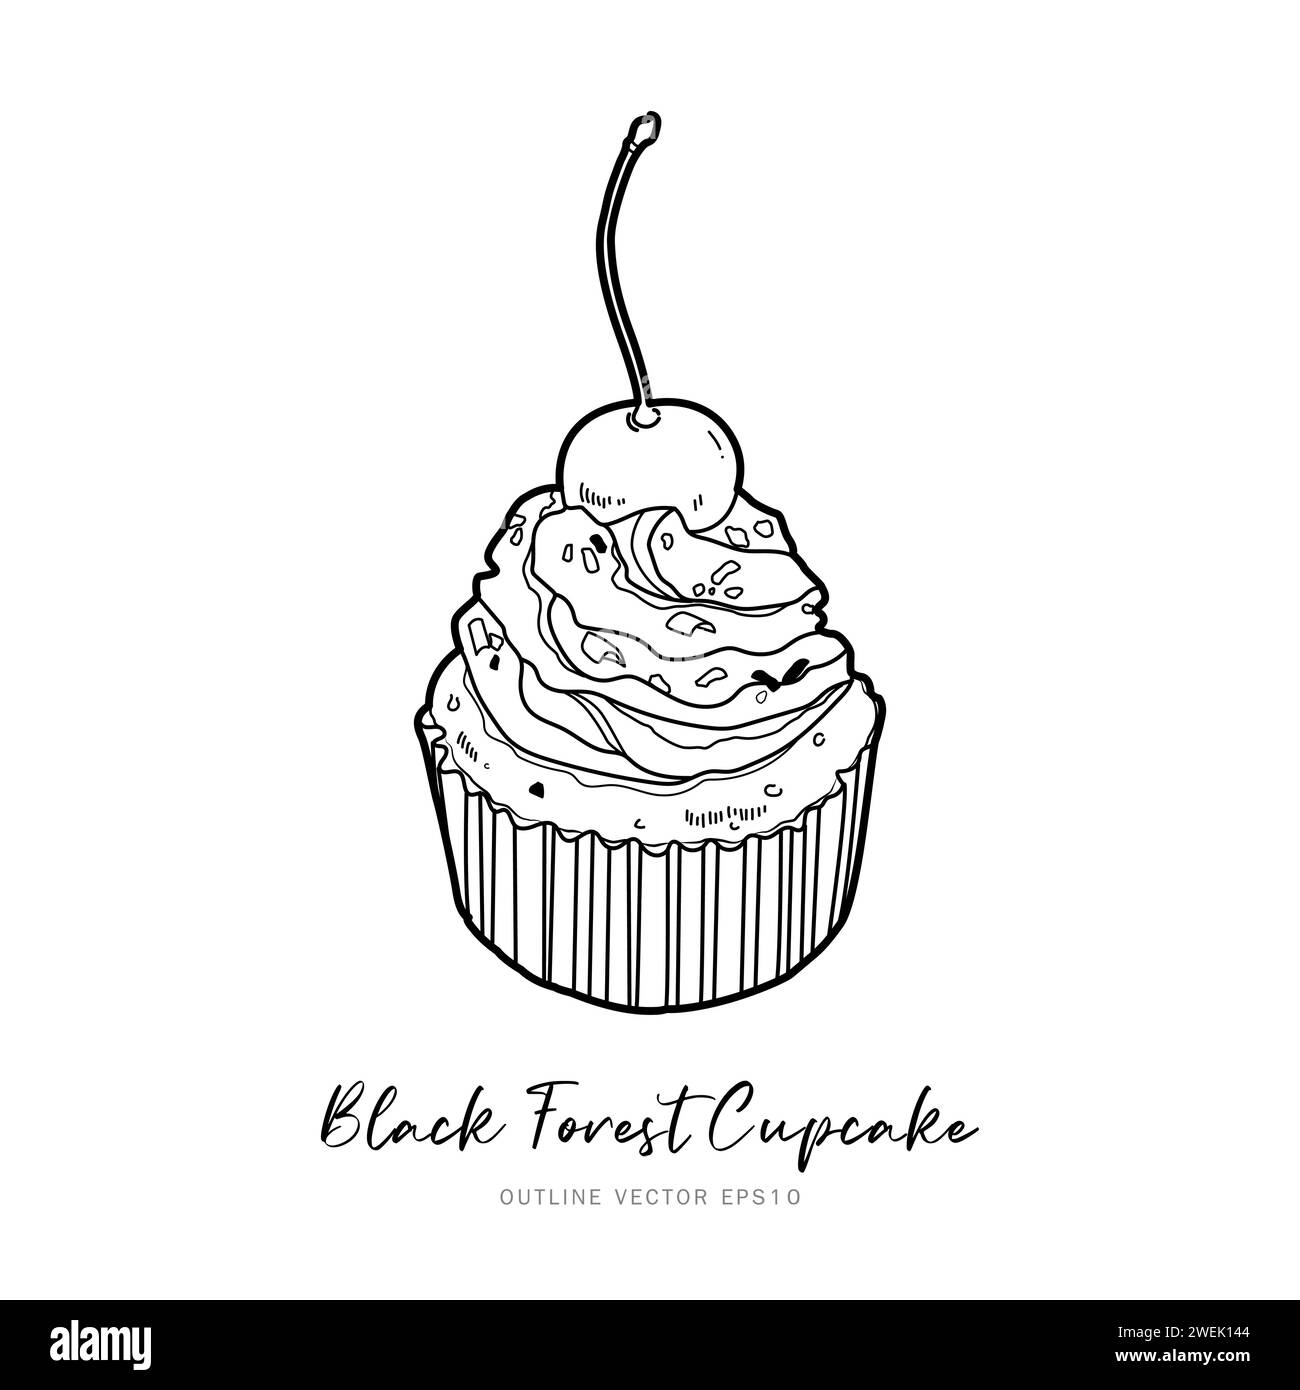 Black forest cupcake dessert outline vector design on white background Stock Vector